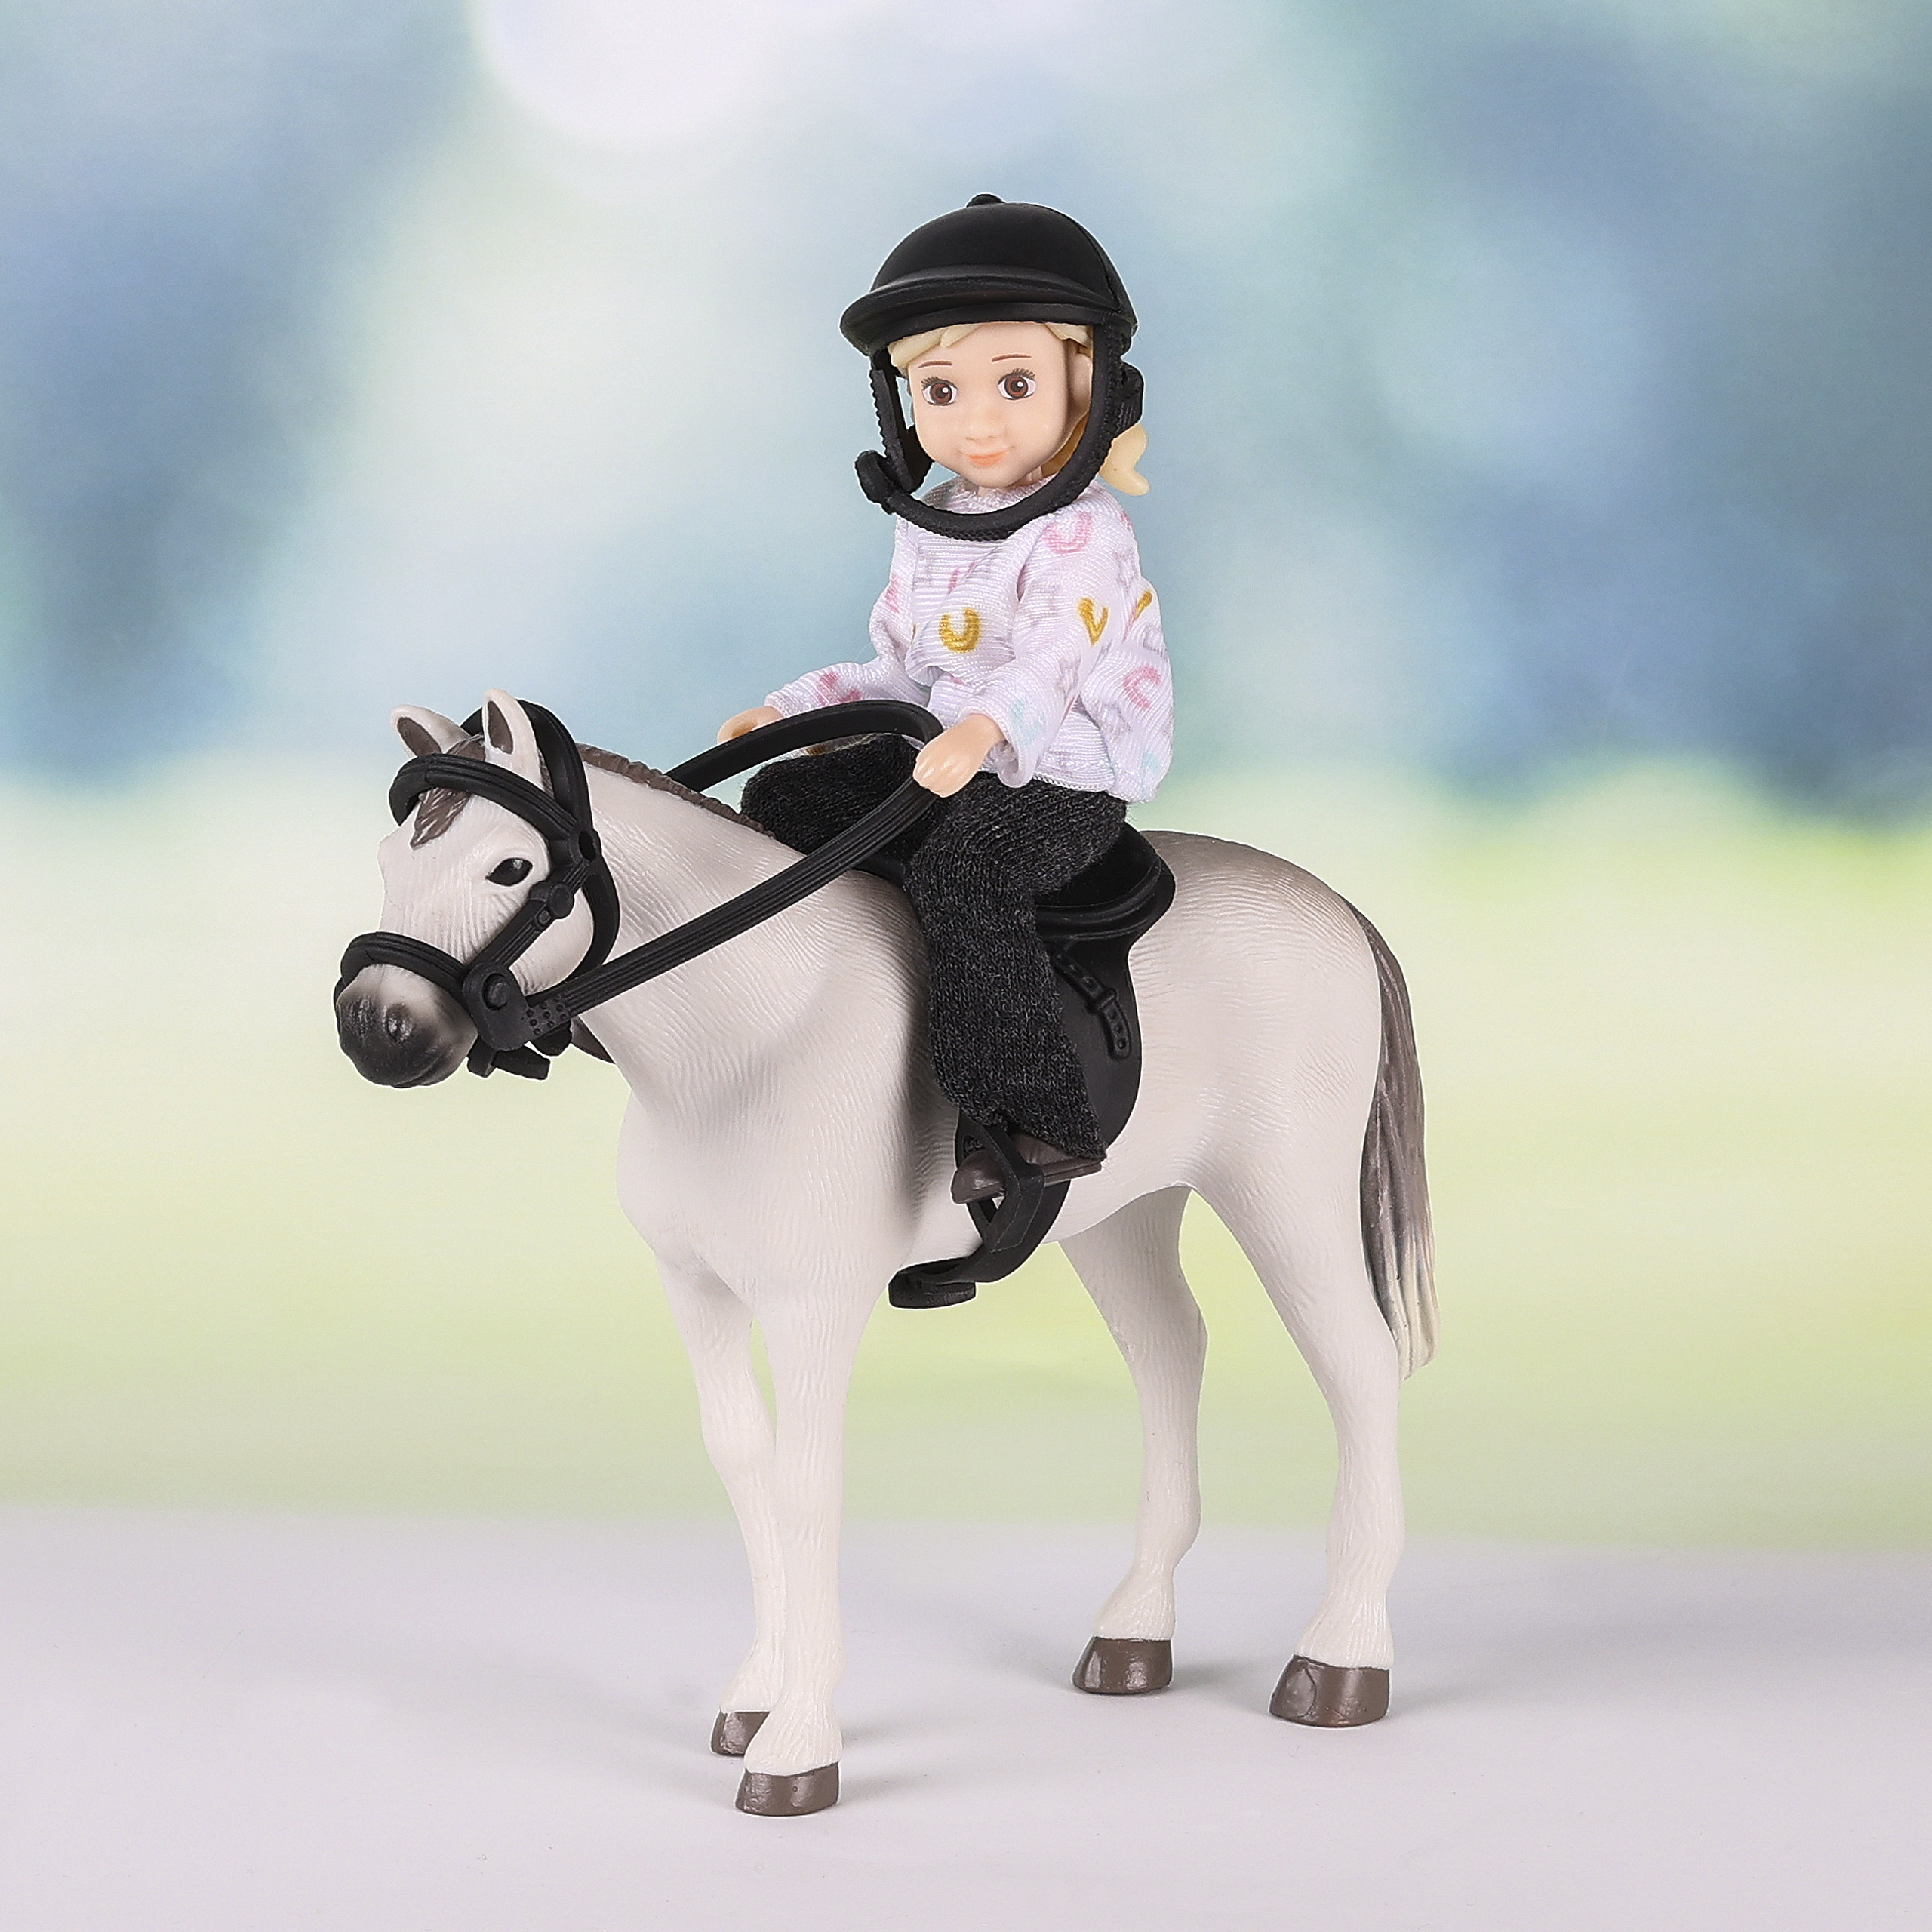 Dolls lundby	dollshouse doll with horse